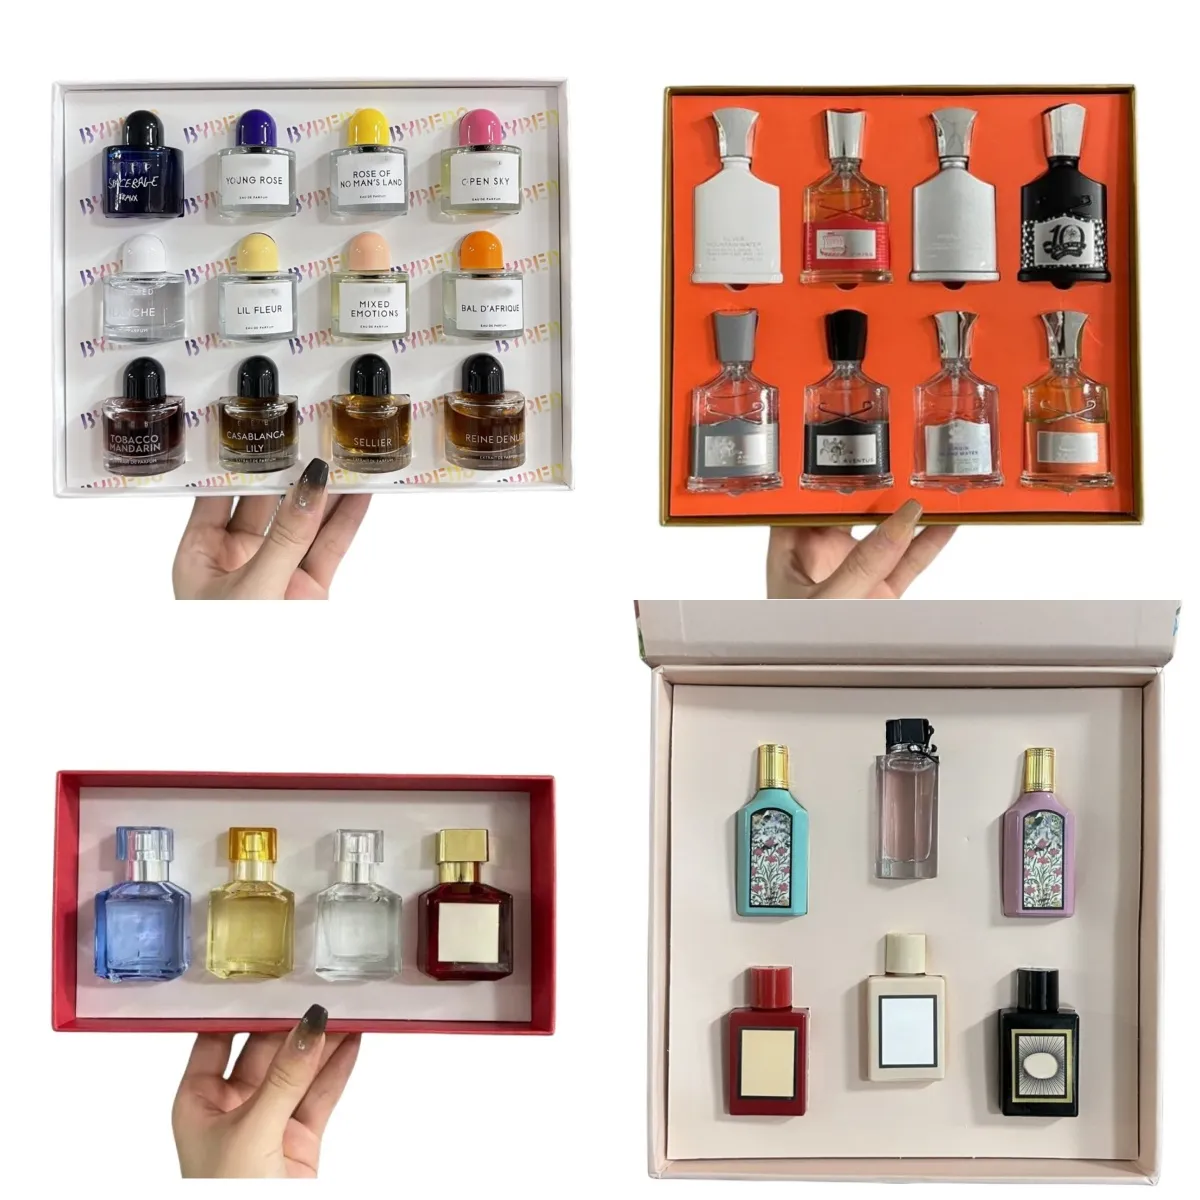 High Quality Perfume set gift box Cologne Fragrance for women men Parfum Spray good Smell Long time lasting